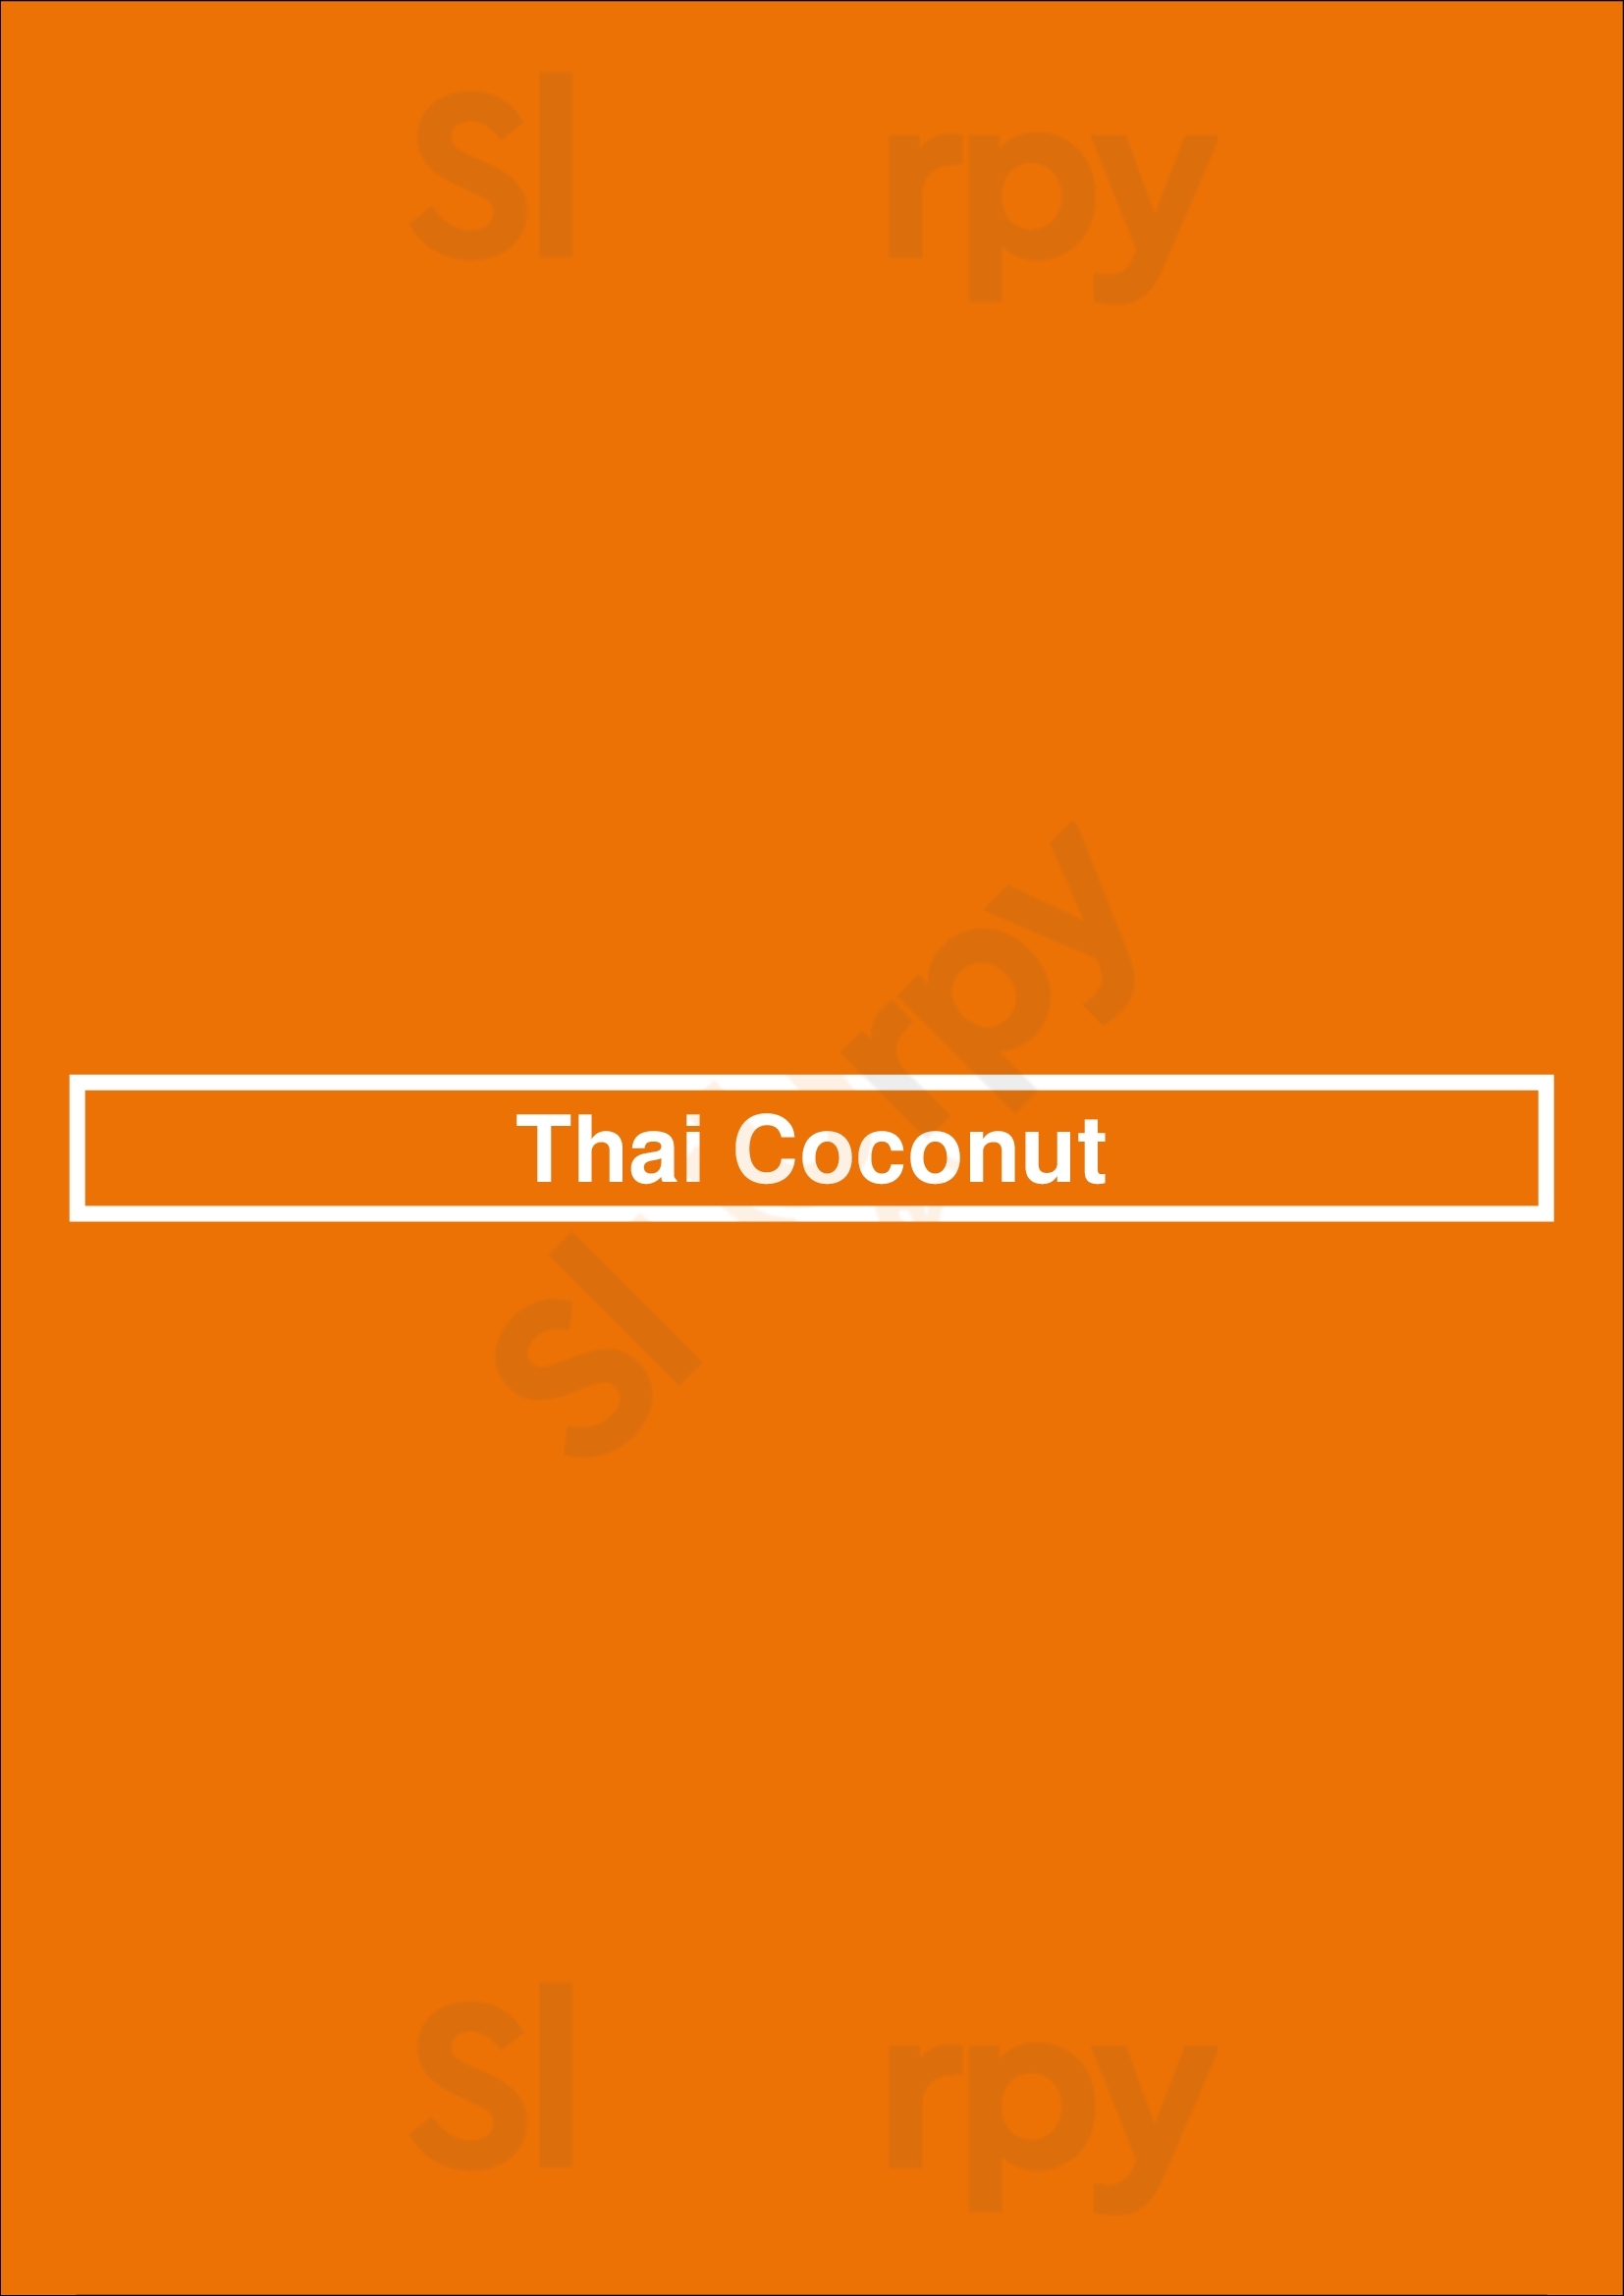 Thai Coconut Ottawa Menu - 1